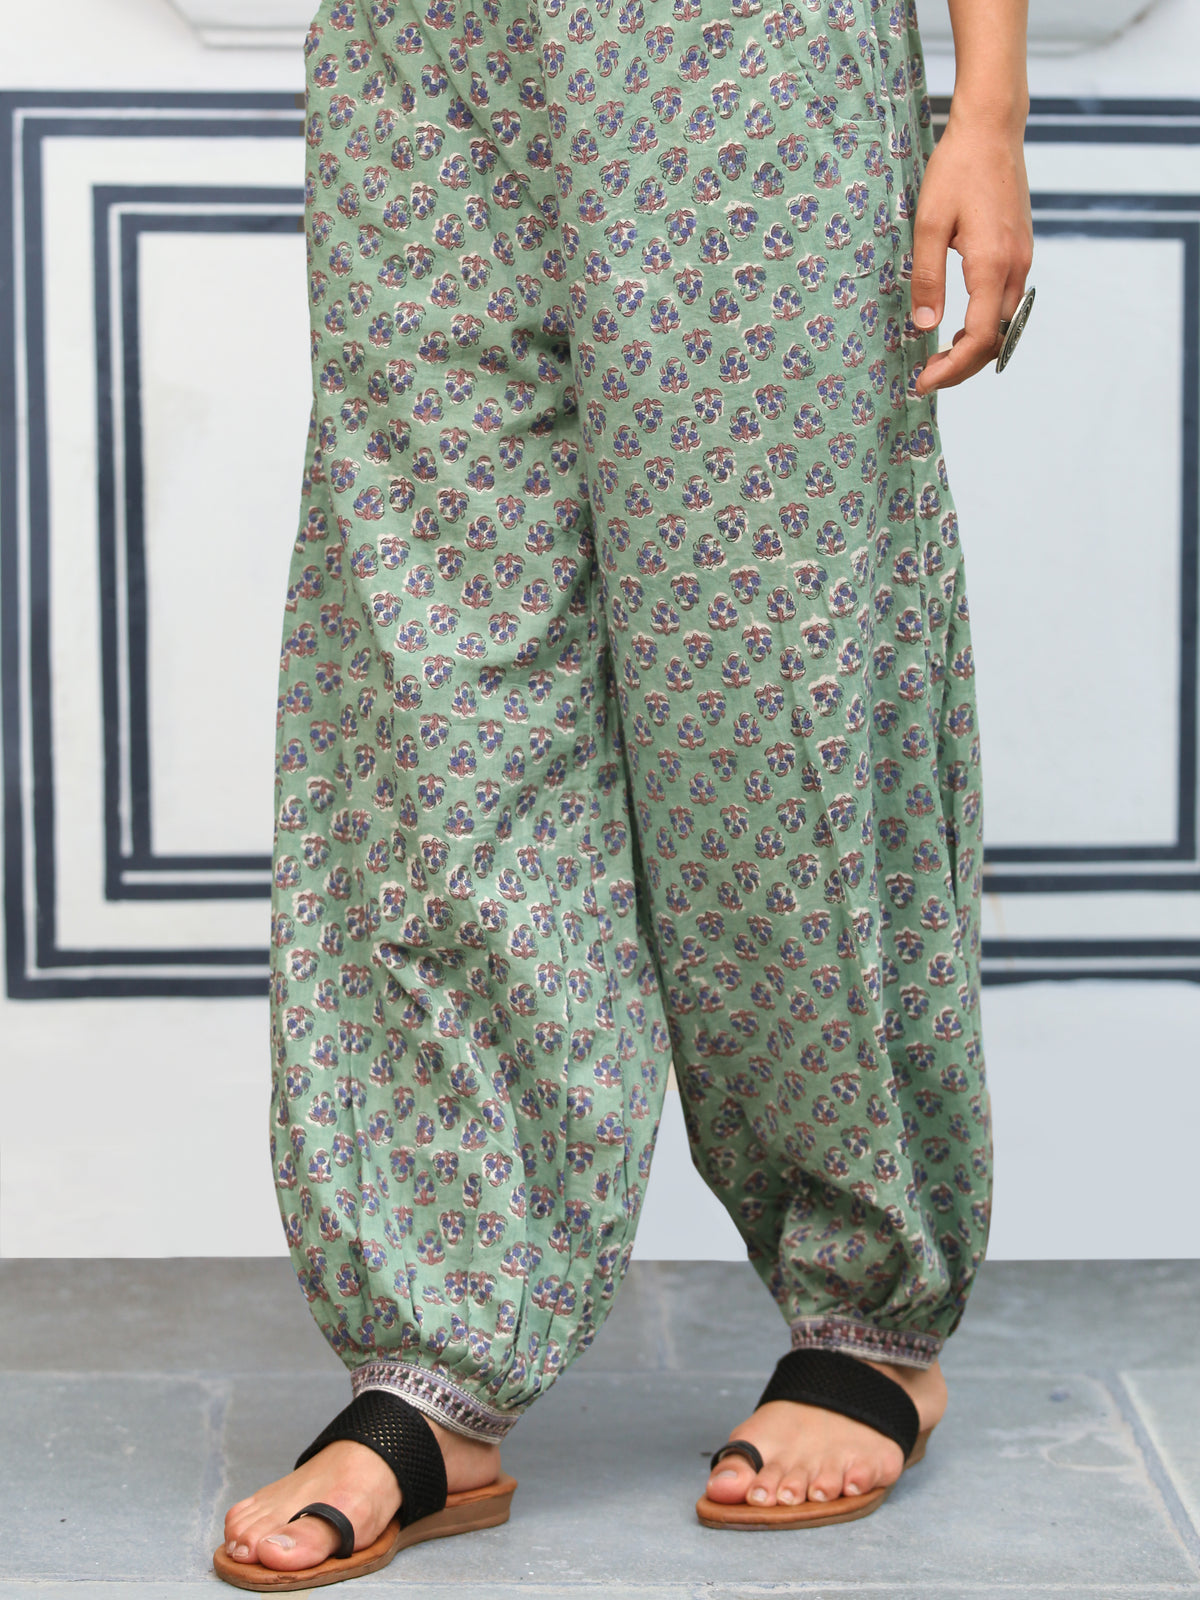 MUSTARD BANARAS BUTTA, SEQUINS AND ZARI WORK ANARKALI STYLE SALWAR SUIT  WITH STRAIGHT PANTS | Straight pants, Style, Salwar suits